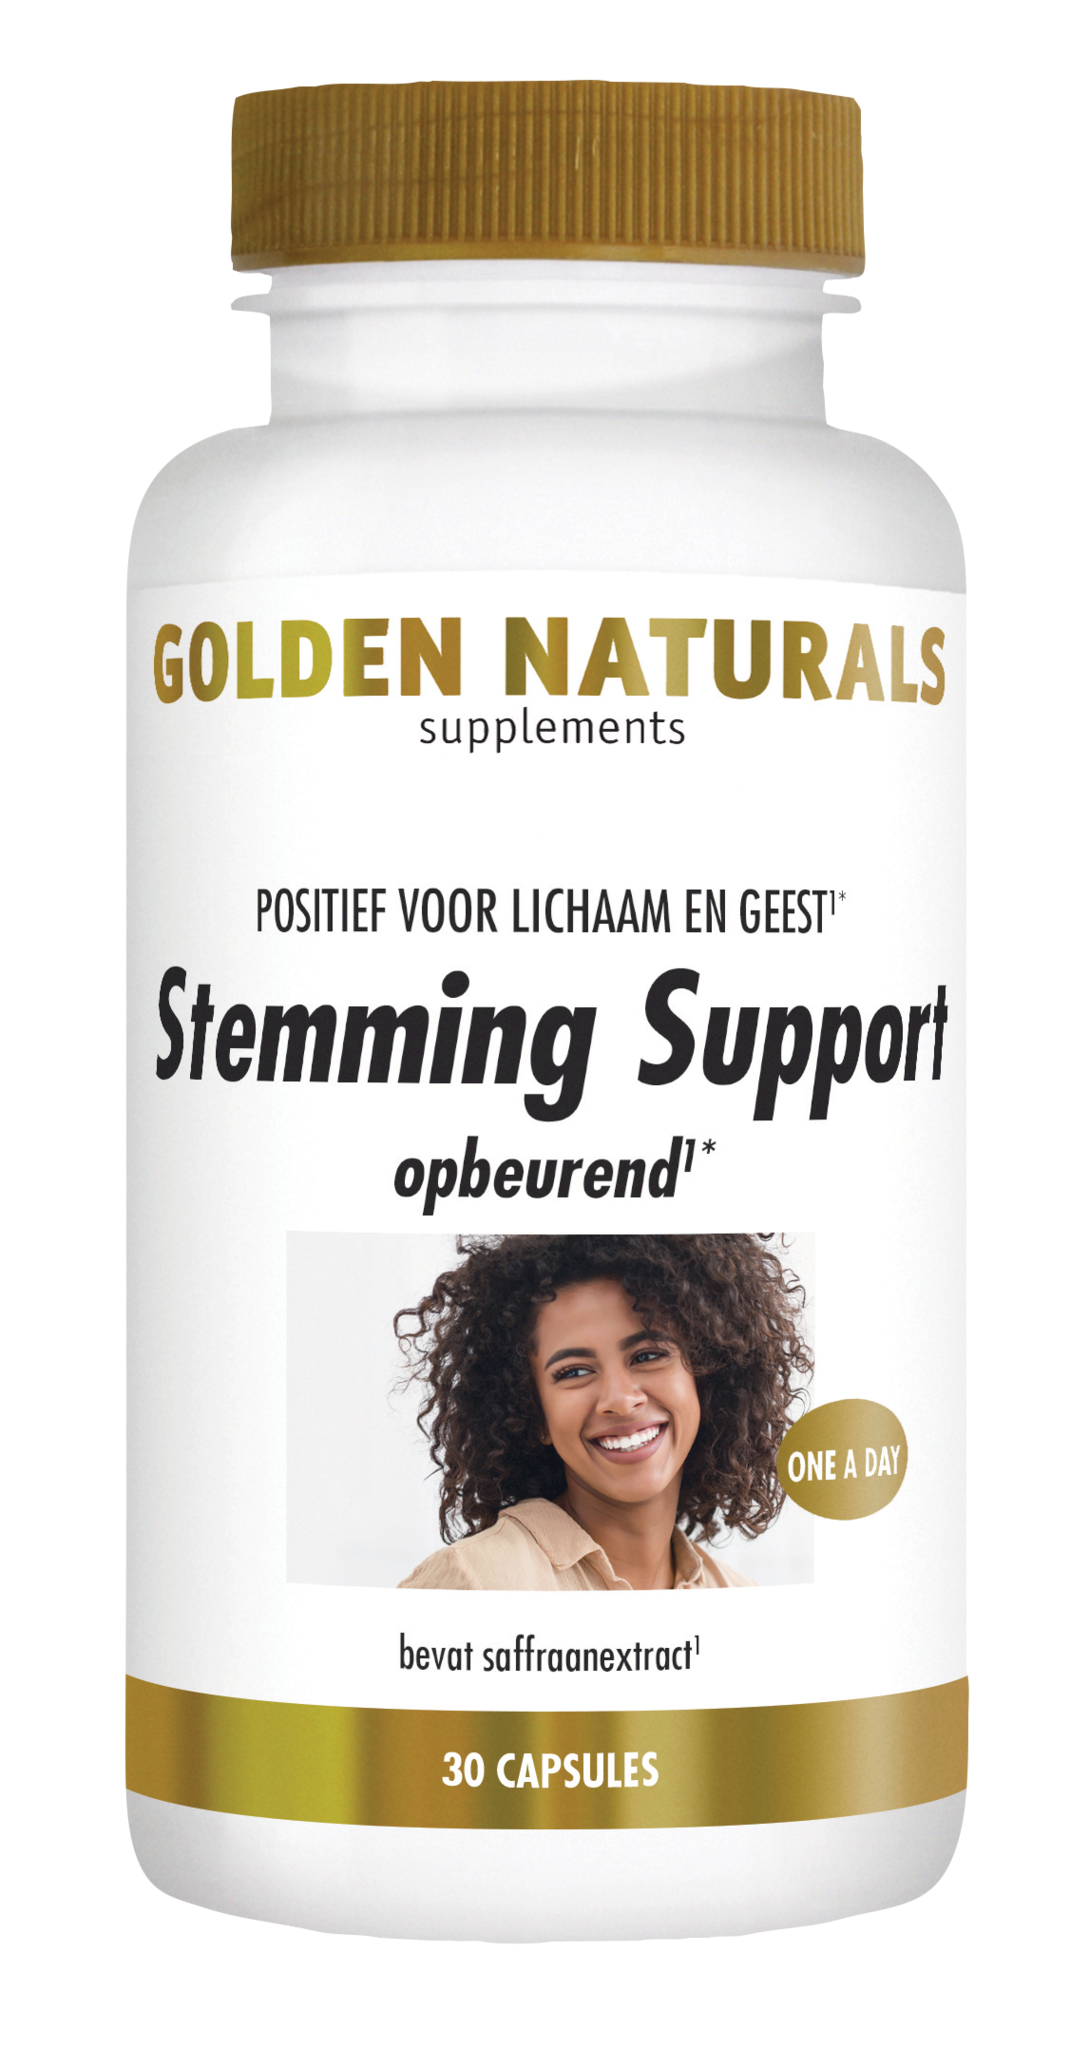 Golden Naturals Stemming Support